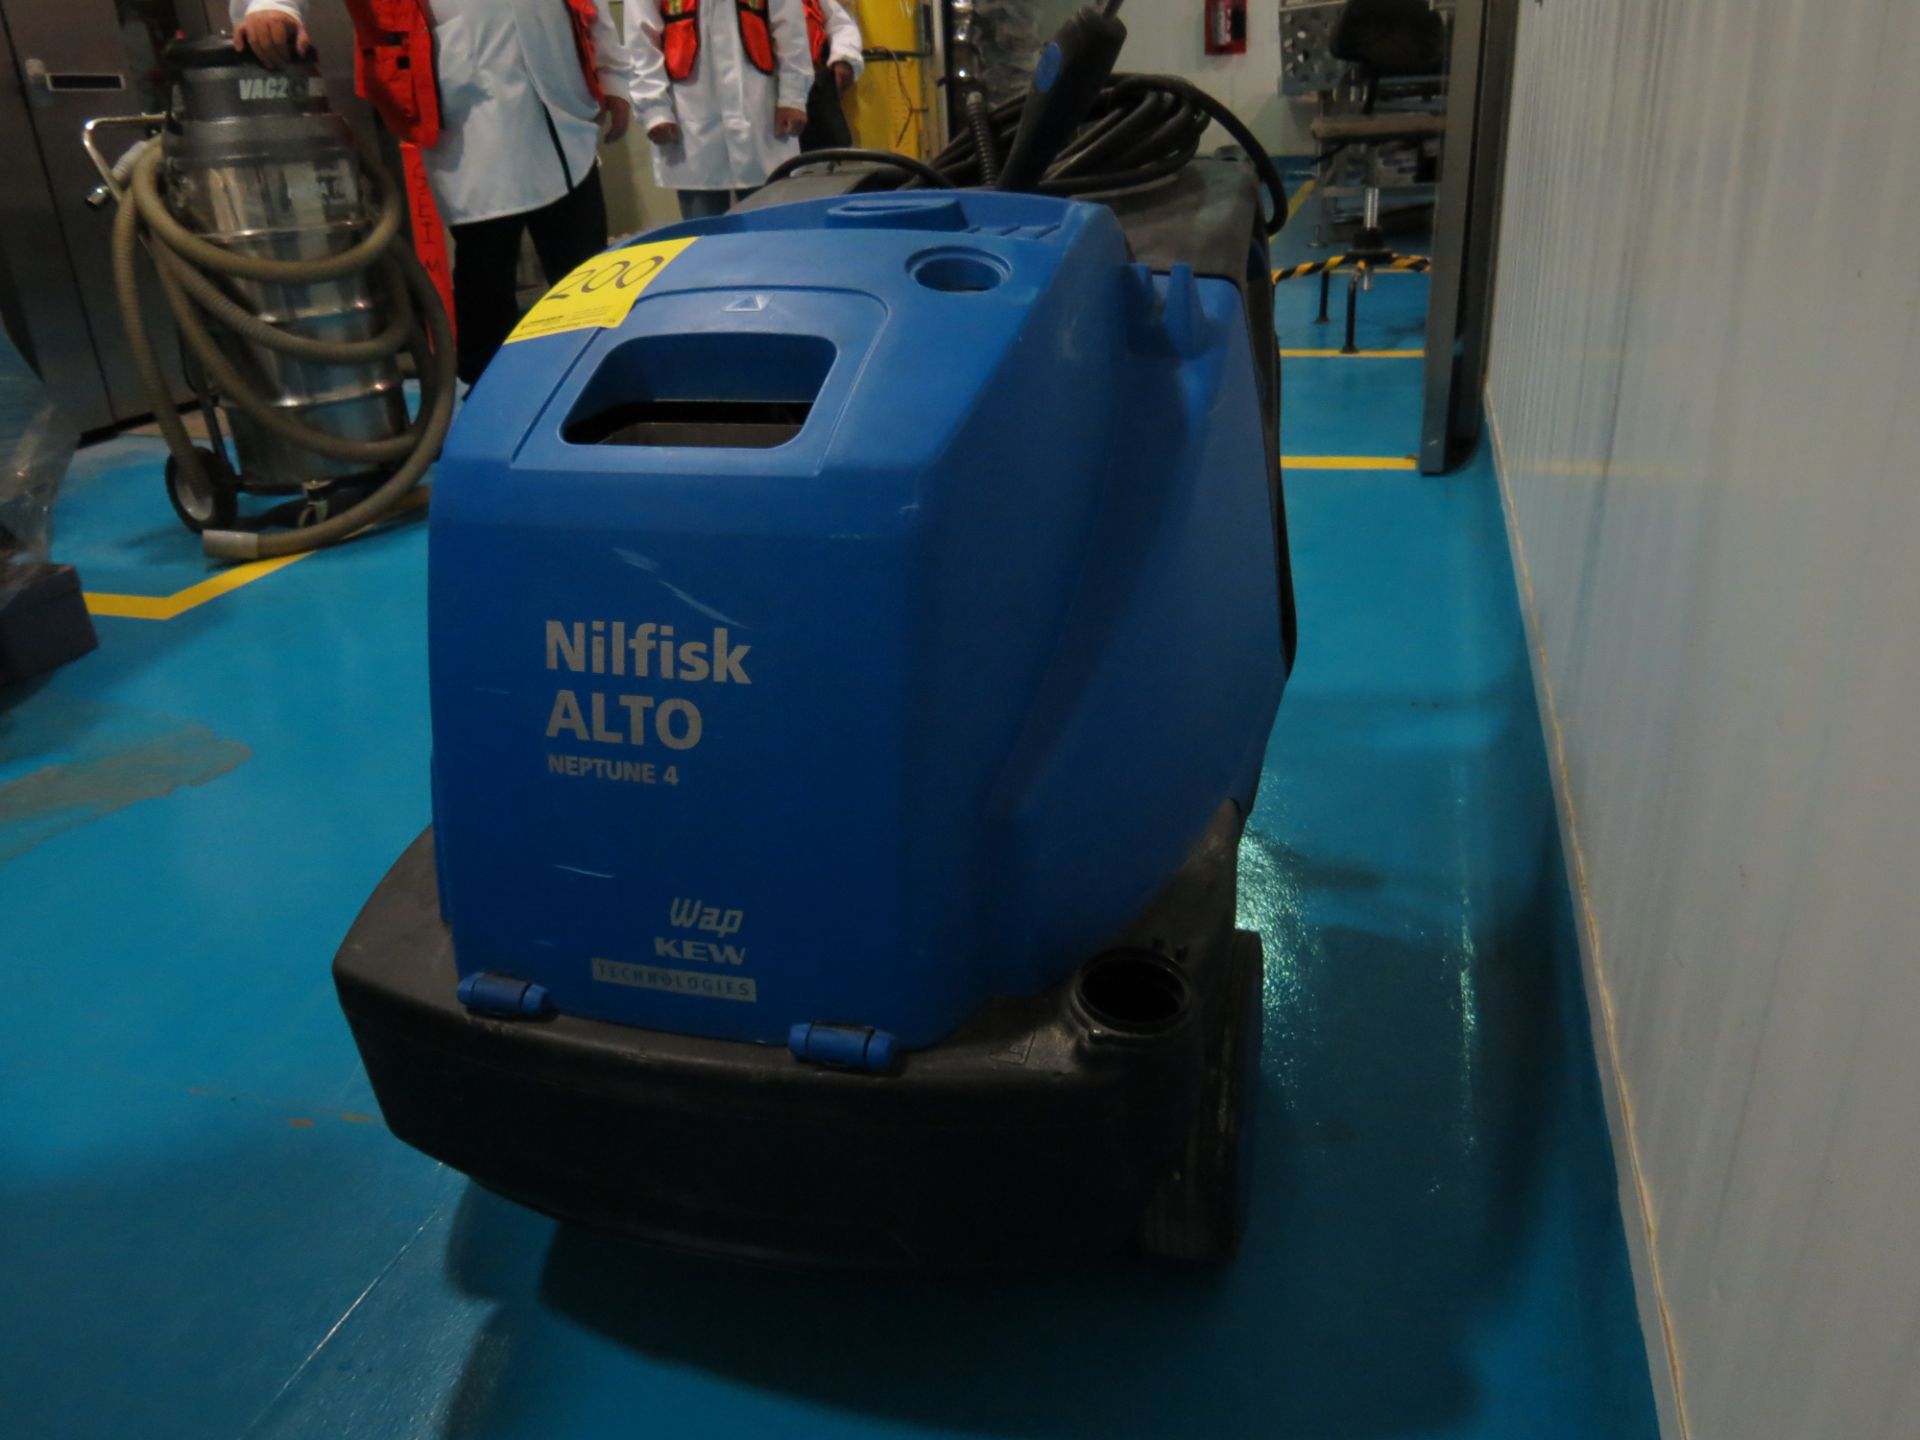 Alto High pressure washing machine brand Nilfisk with Hot Water, Capacity 6.7 L/min